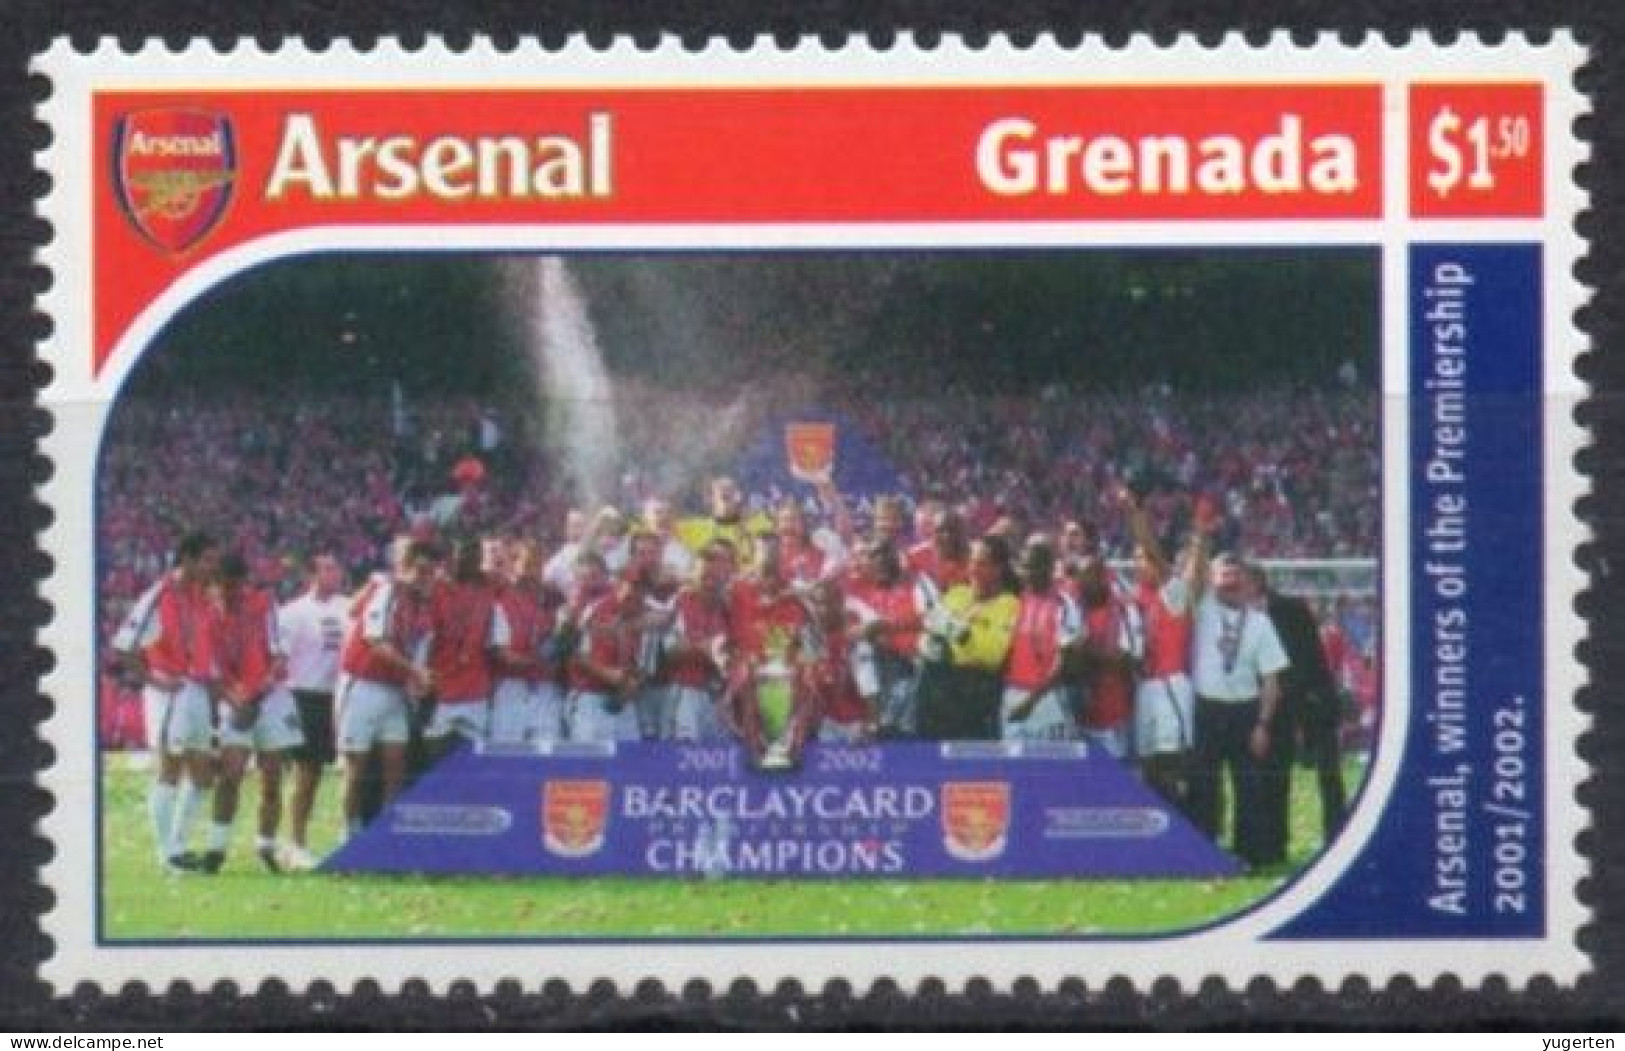 GRENADA 2002 - 1v - MNH - Football - England - Arsenal - Fußball - Fútbol - Futebol - Calcio - Soccer - Clubs Mythiques